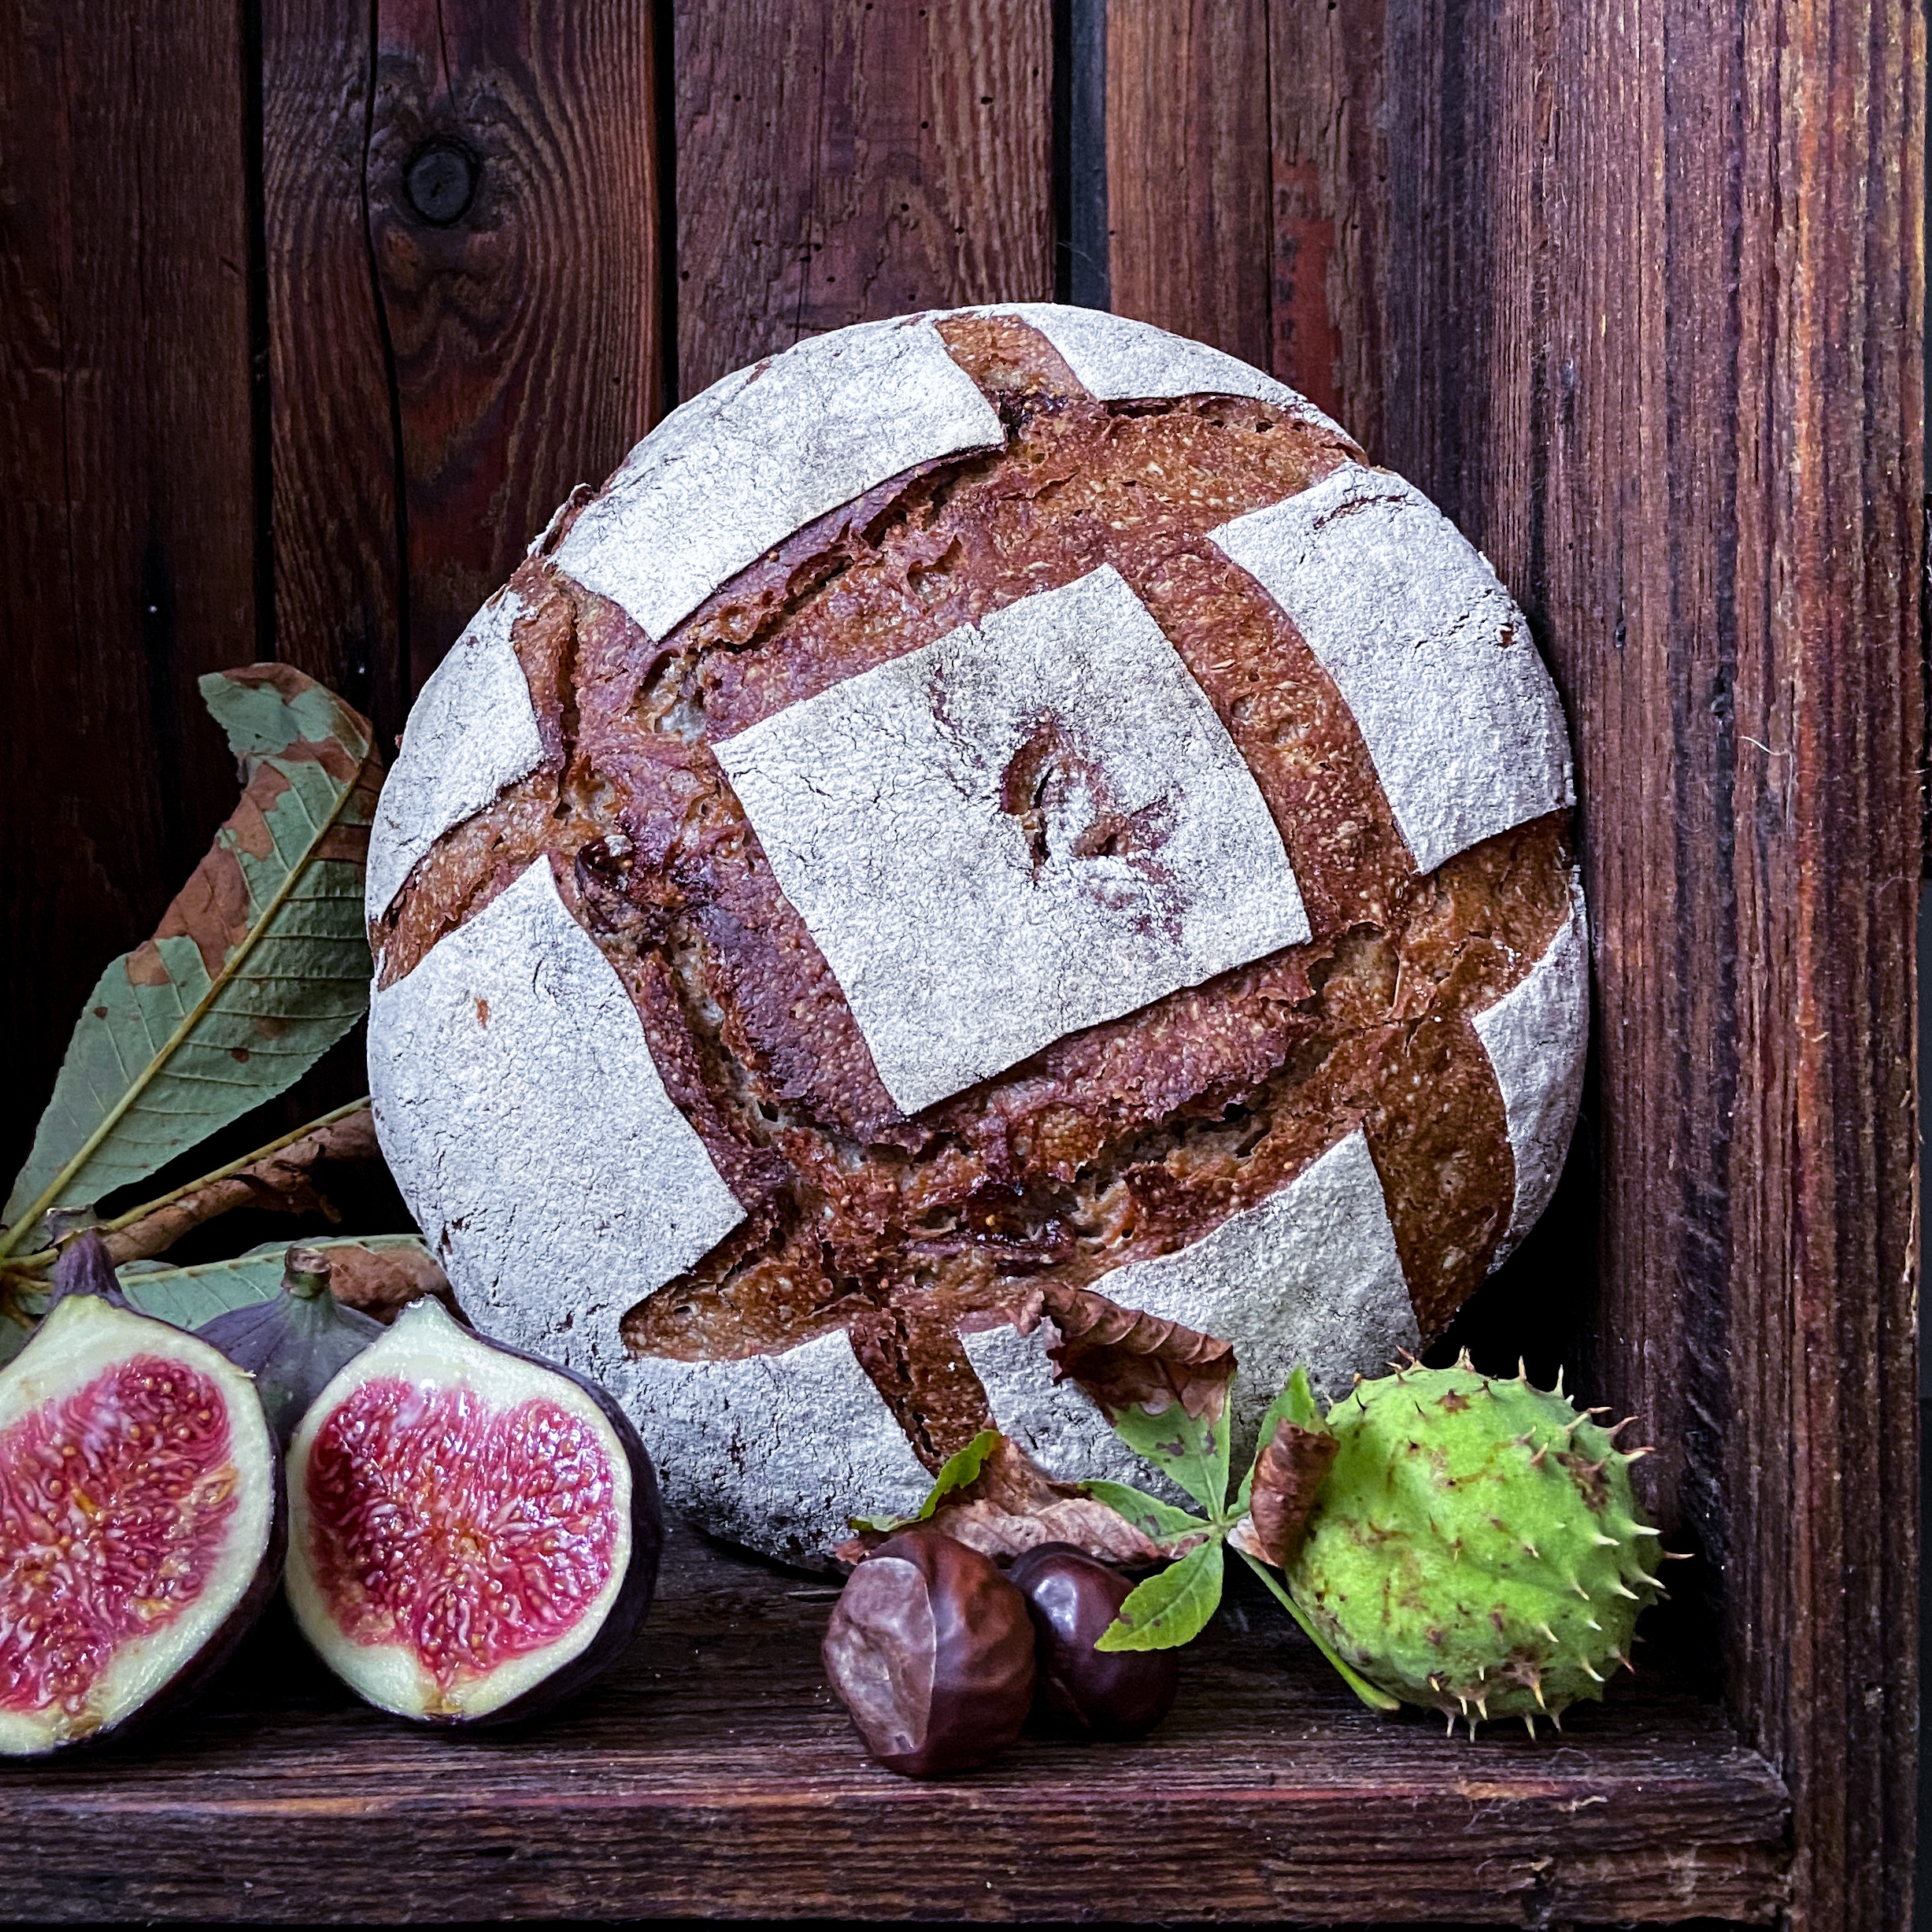 Kastanien-Feigen-Brot, ein rustikales Herbstbrot